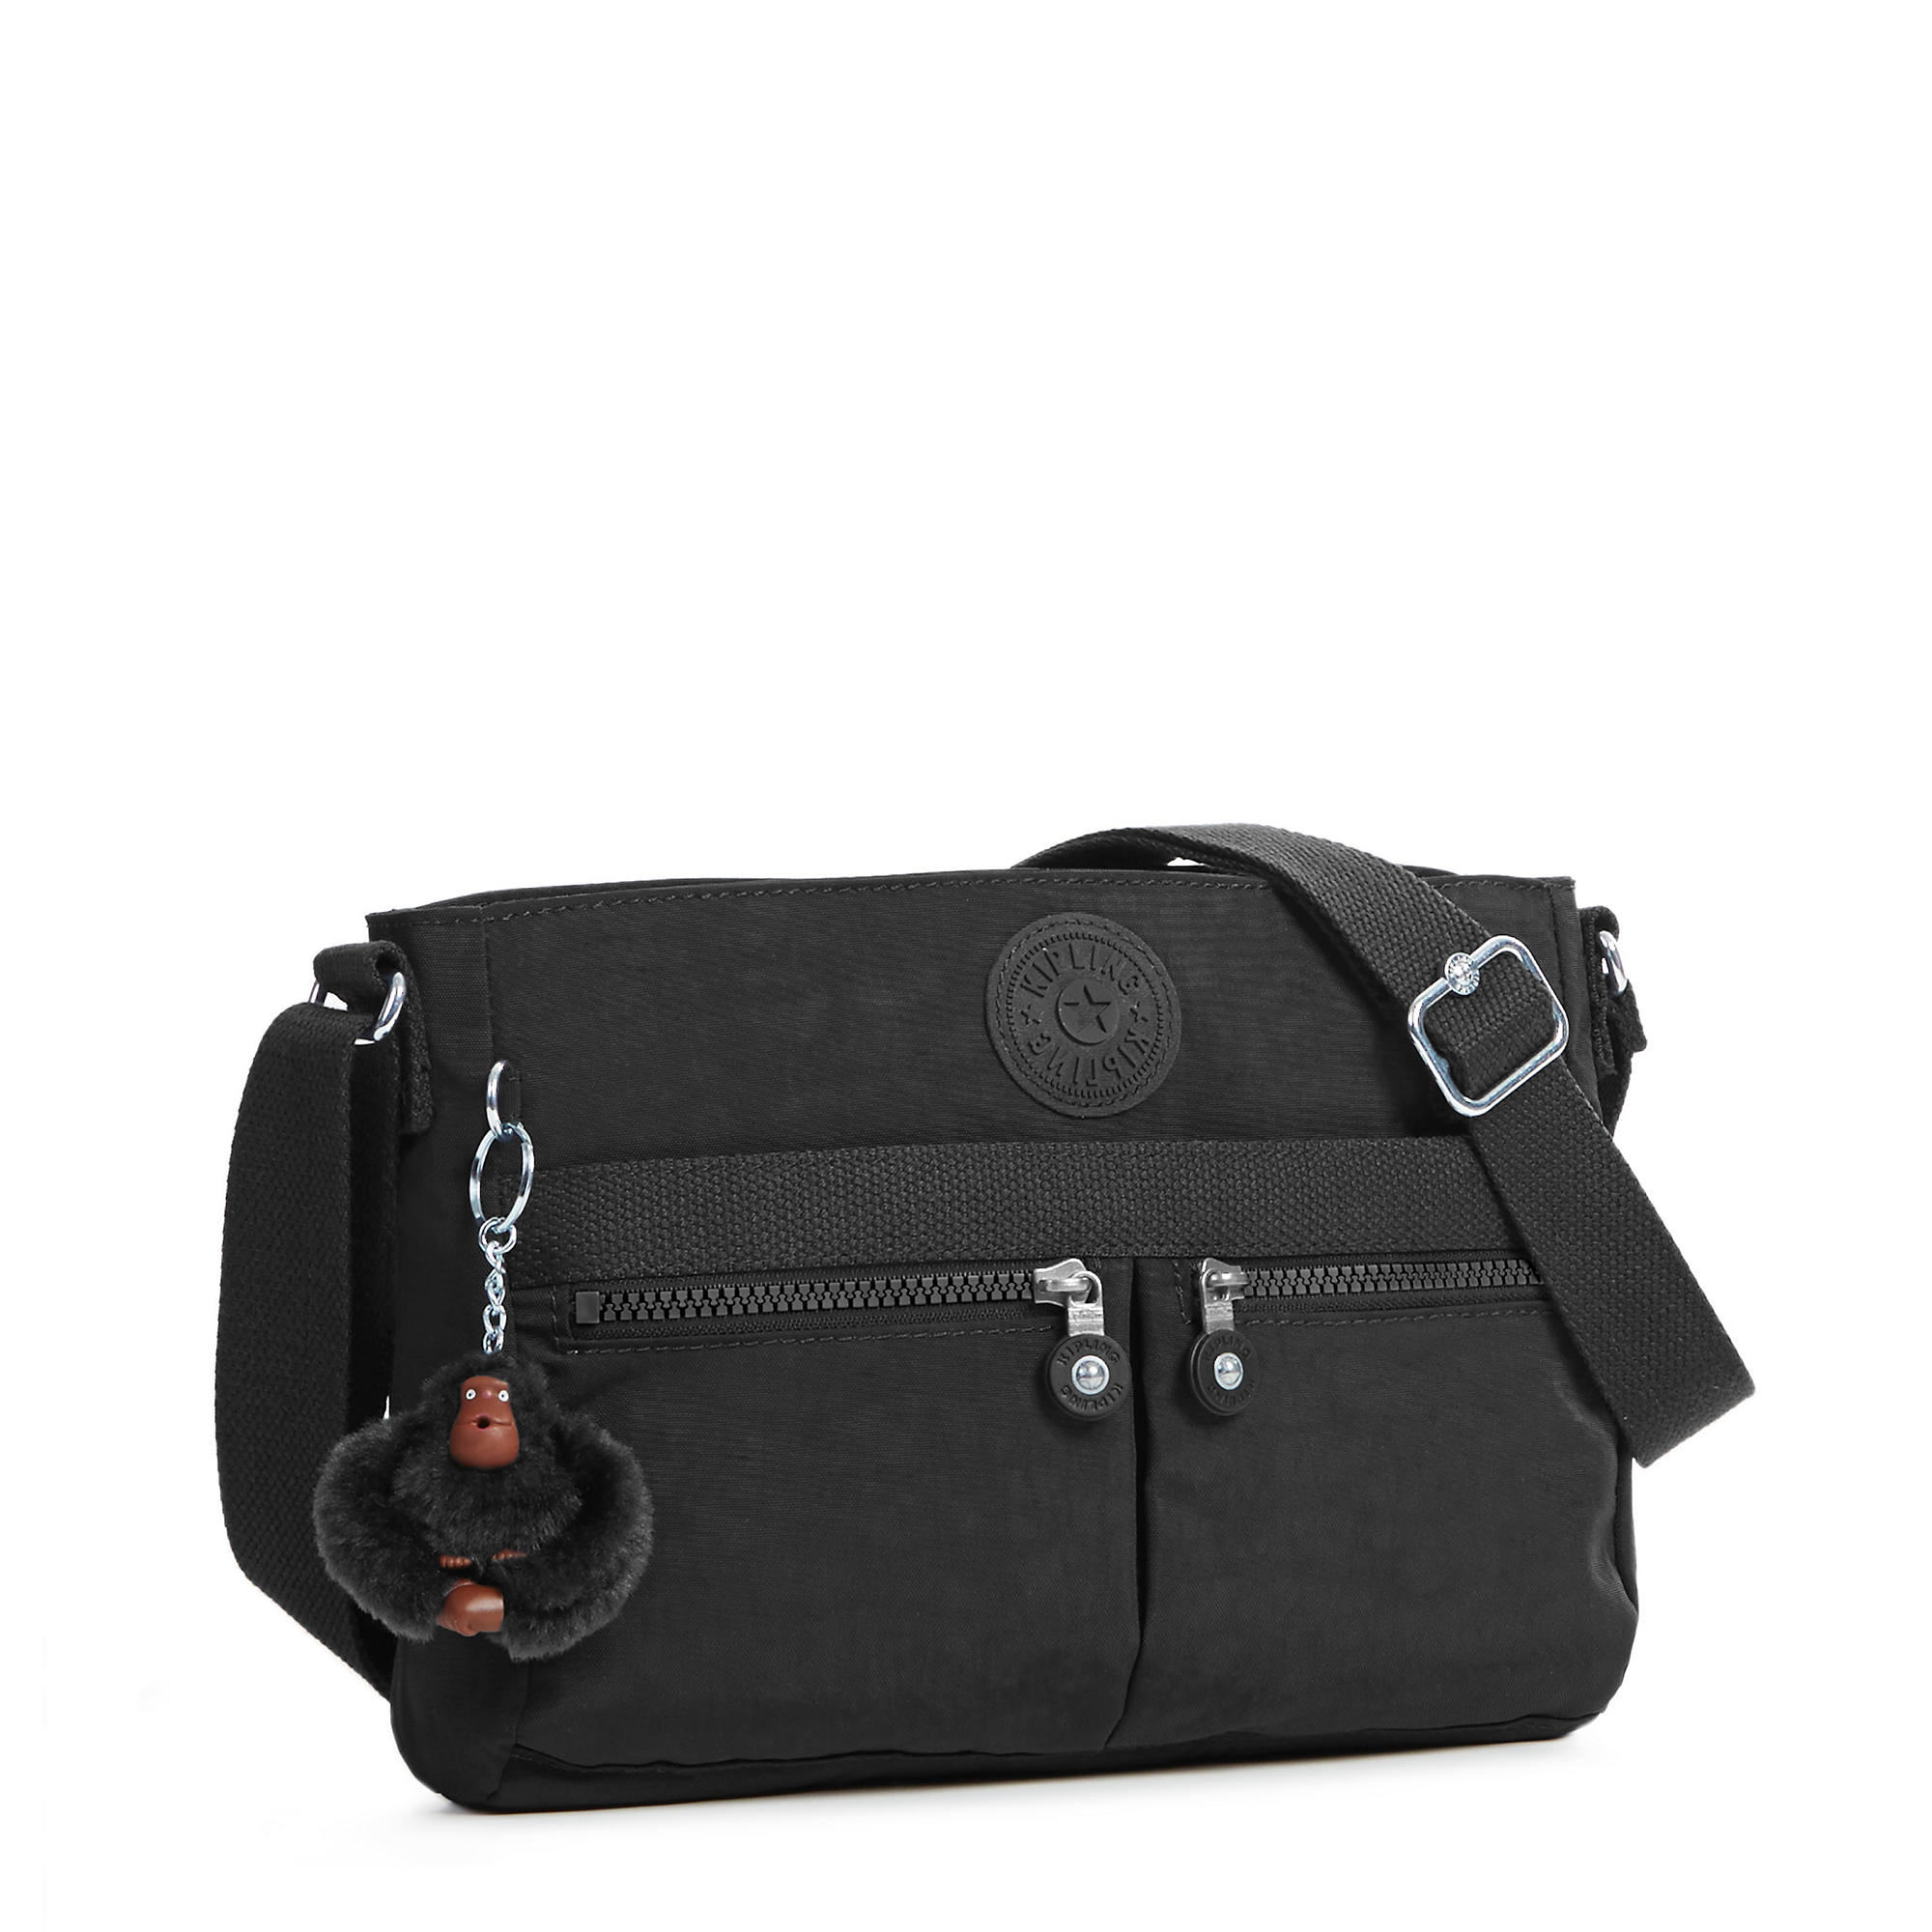 Kipling Angie Metallic Crossbody Bag | eBay